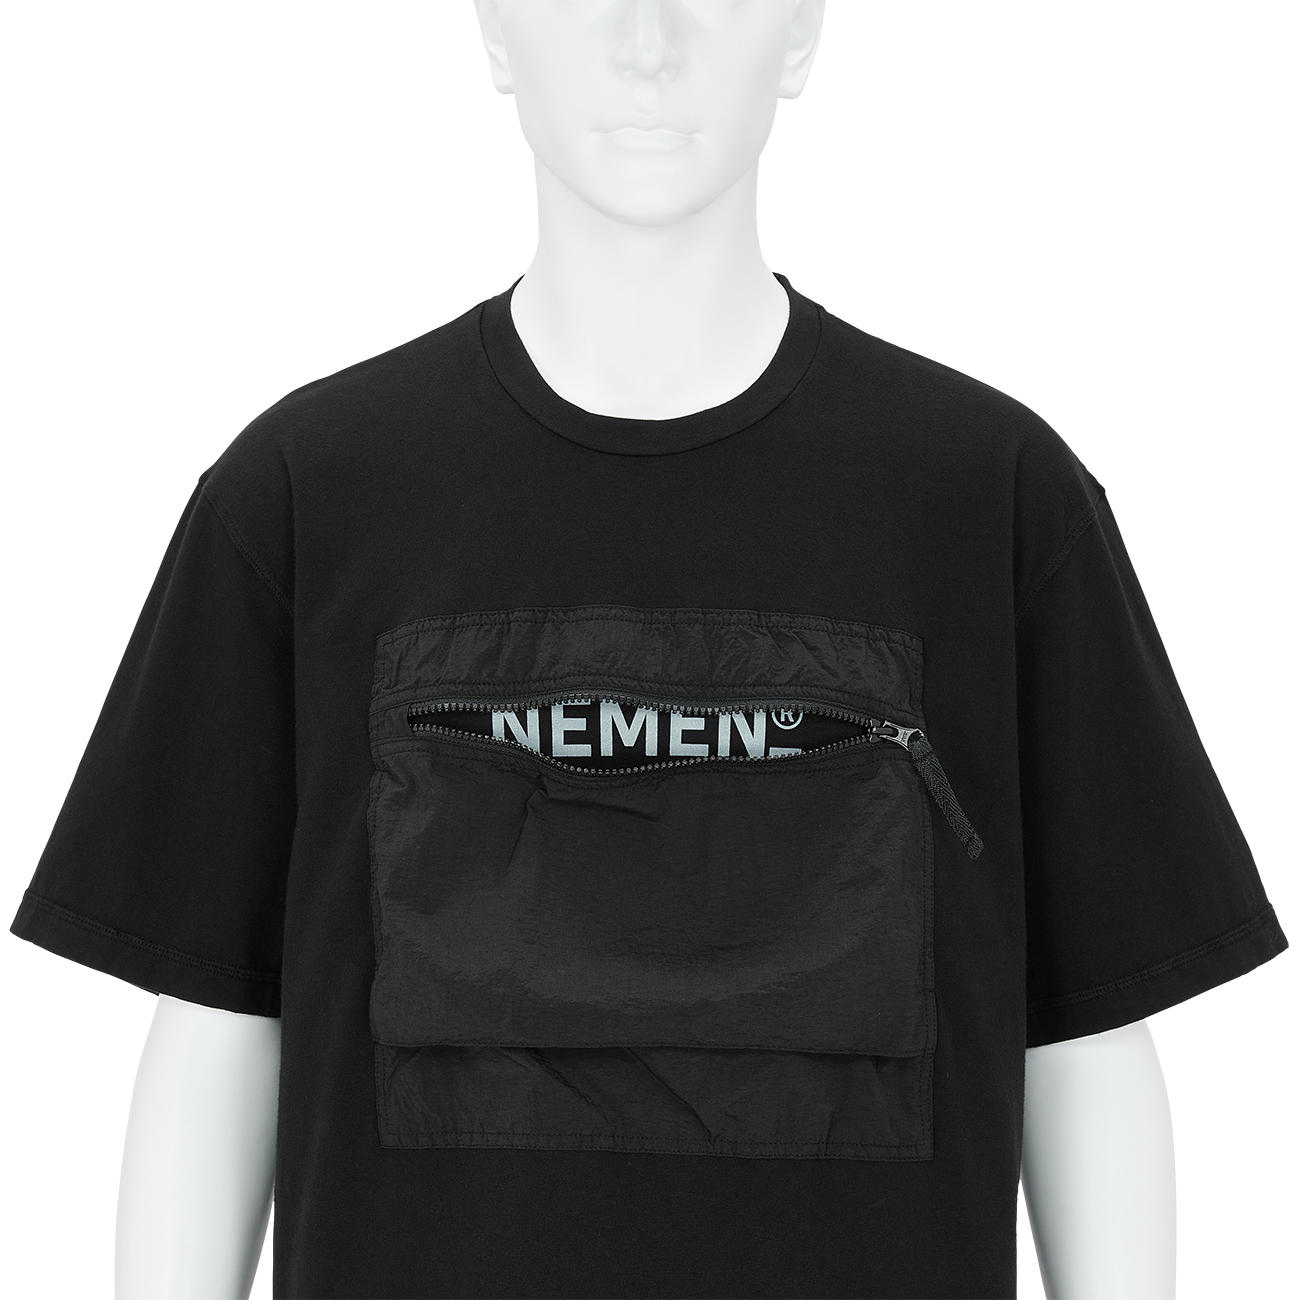 NEMEN (ネメン) - KEL CHEST POCKET T-SHIRT BLACKの詳細画像4